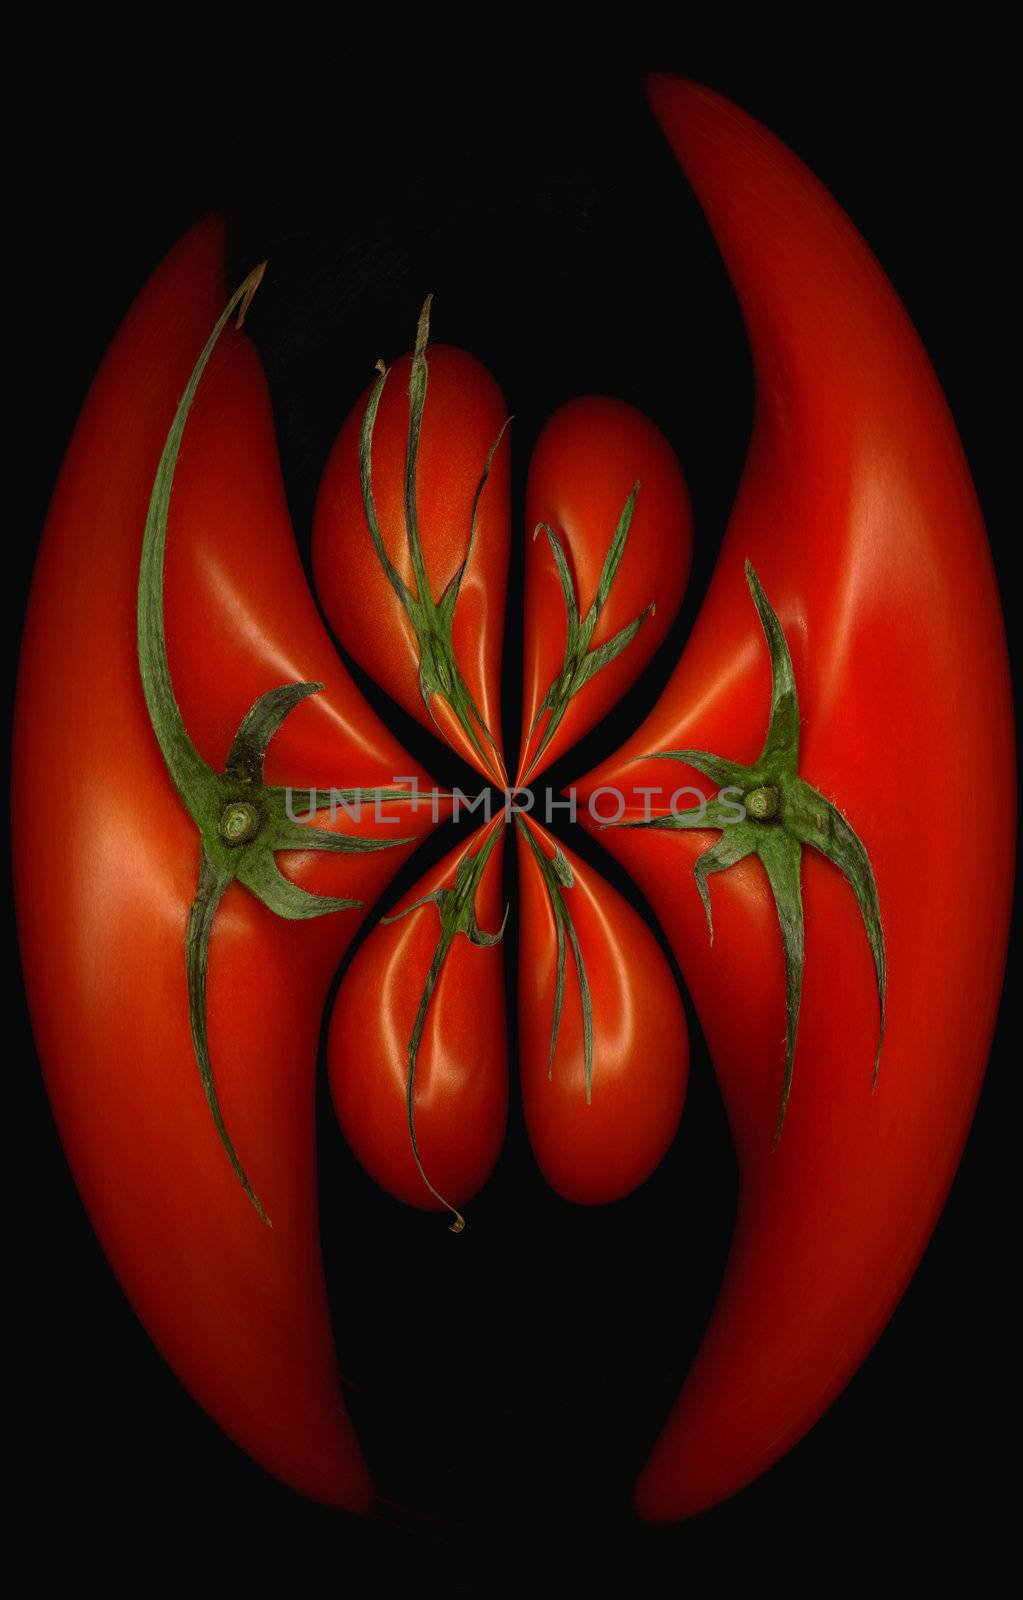 tomatoes distortion by keko64